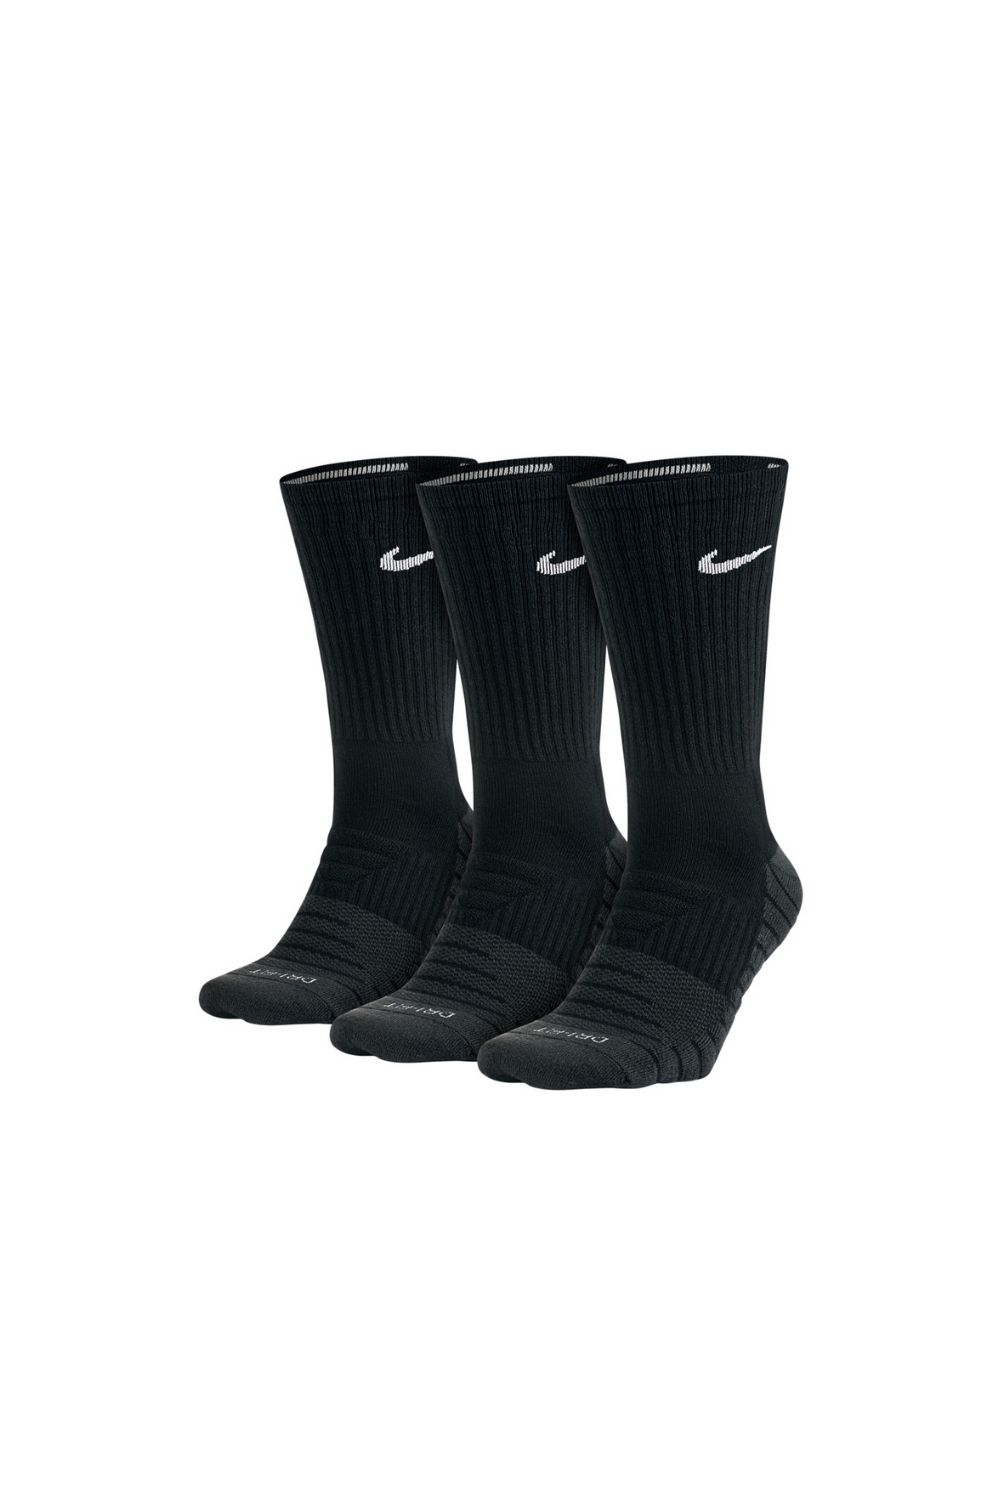 NIKE - Κάλτσες προπόνησης μεσαίου ύψους NIKE MAX CUSH μαύρες Γυναικεία/Αξεσουάρ/Κάλτσες